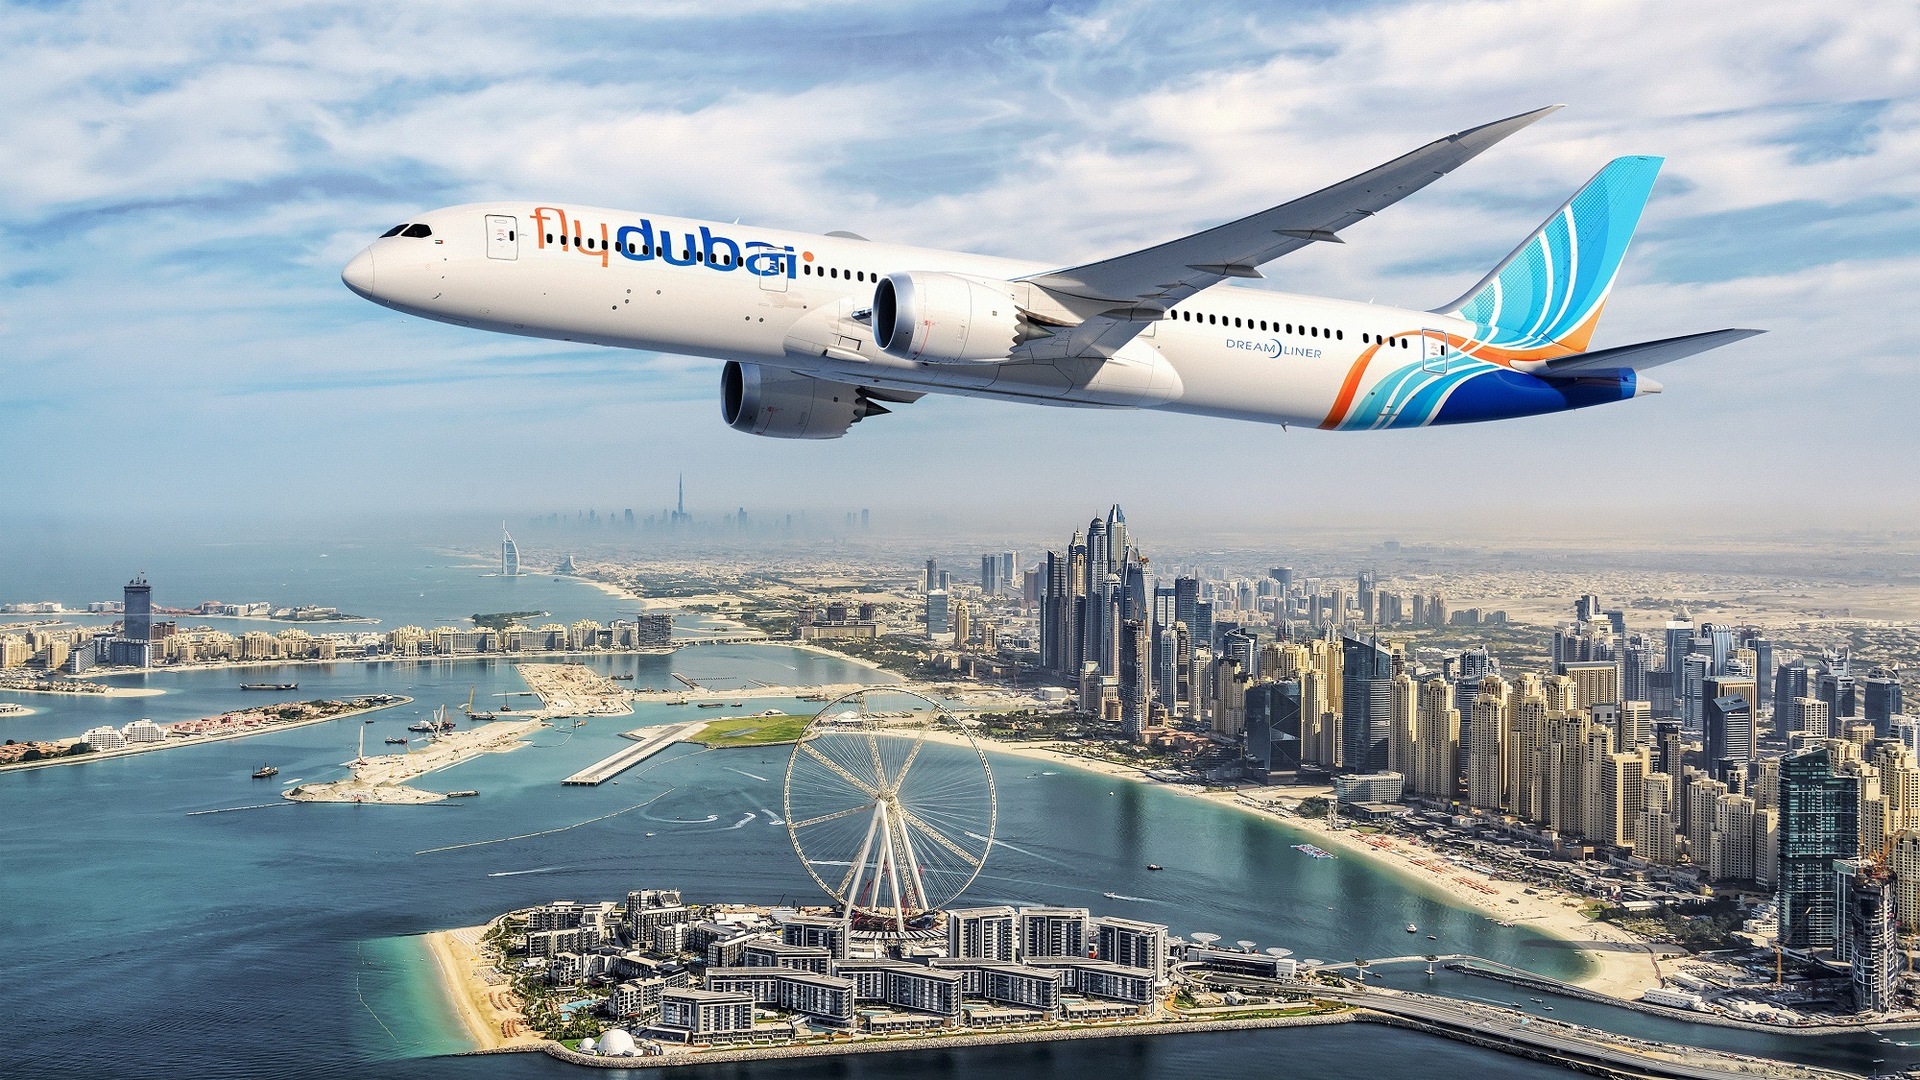 flydubai places USD 11 billion order for 30 Boeing 787 Dreamliners